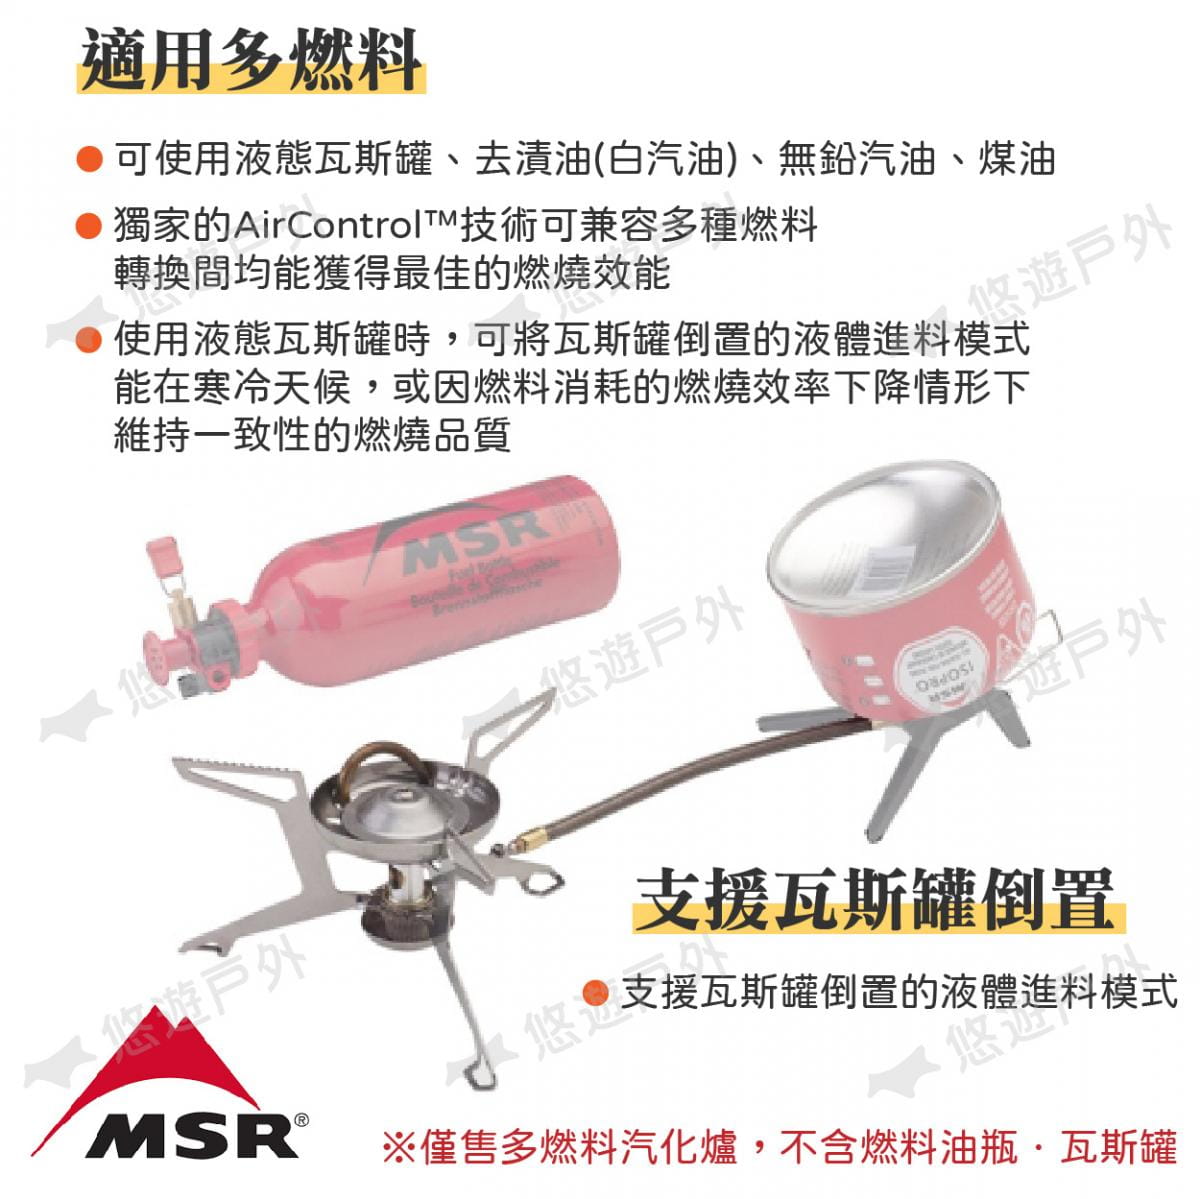 【MSR】多燃料汽化爐 MSR-06630 (悠遊戶外) 2